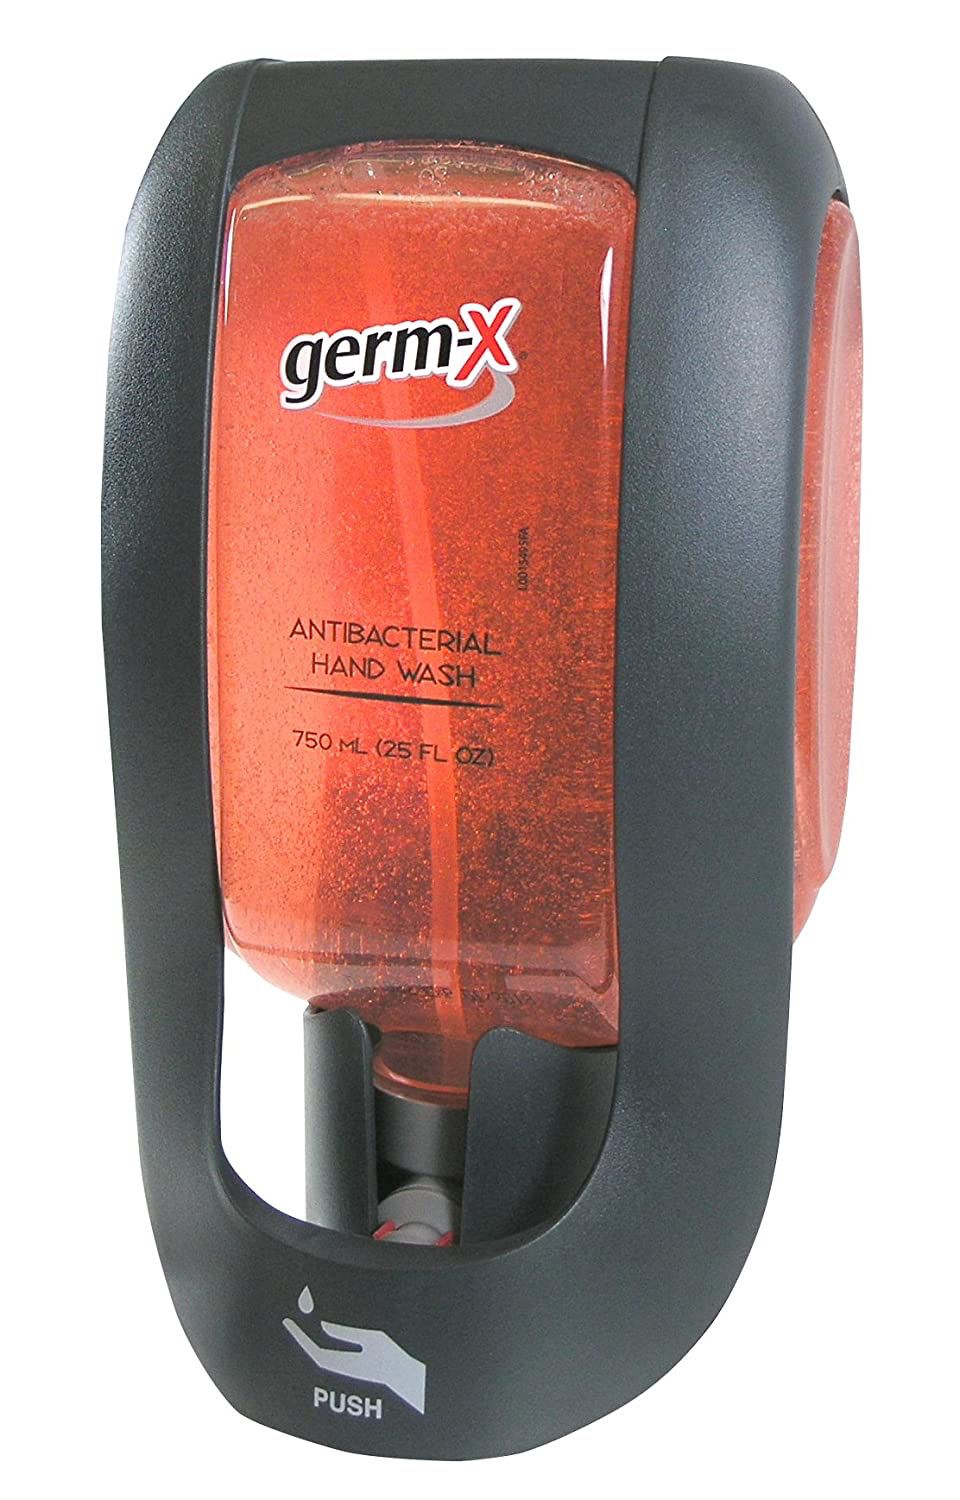 Germ-x - OmniPod Antibacterial Hand Wash Starter Kit, 750 mL